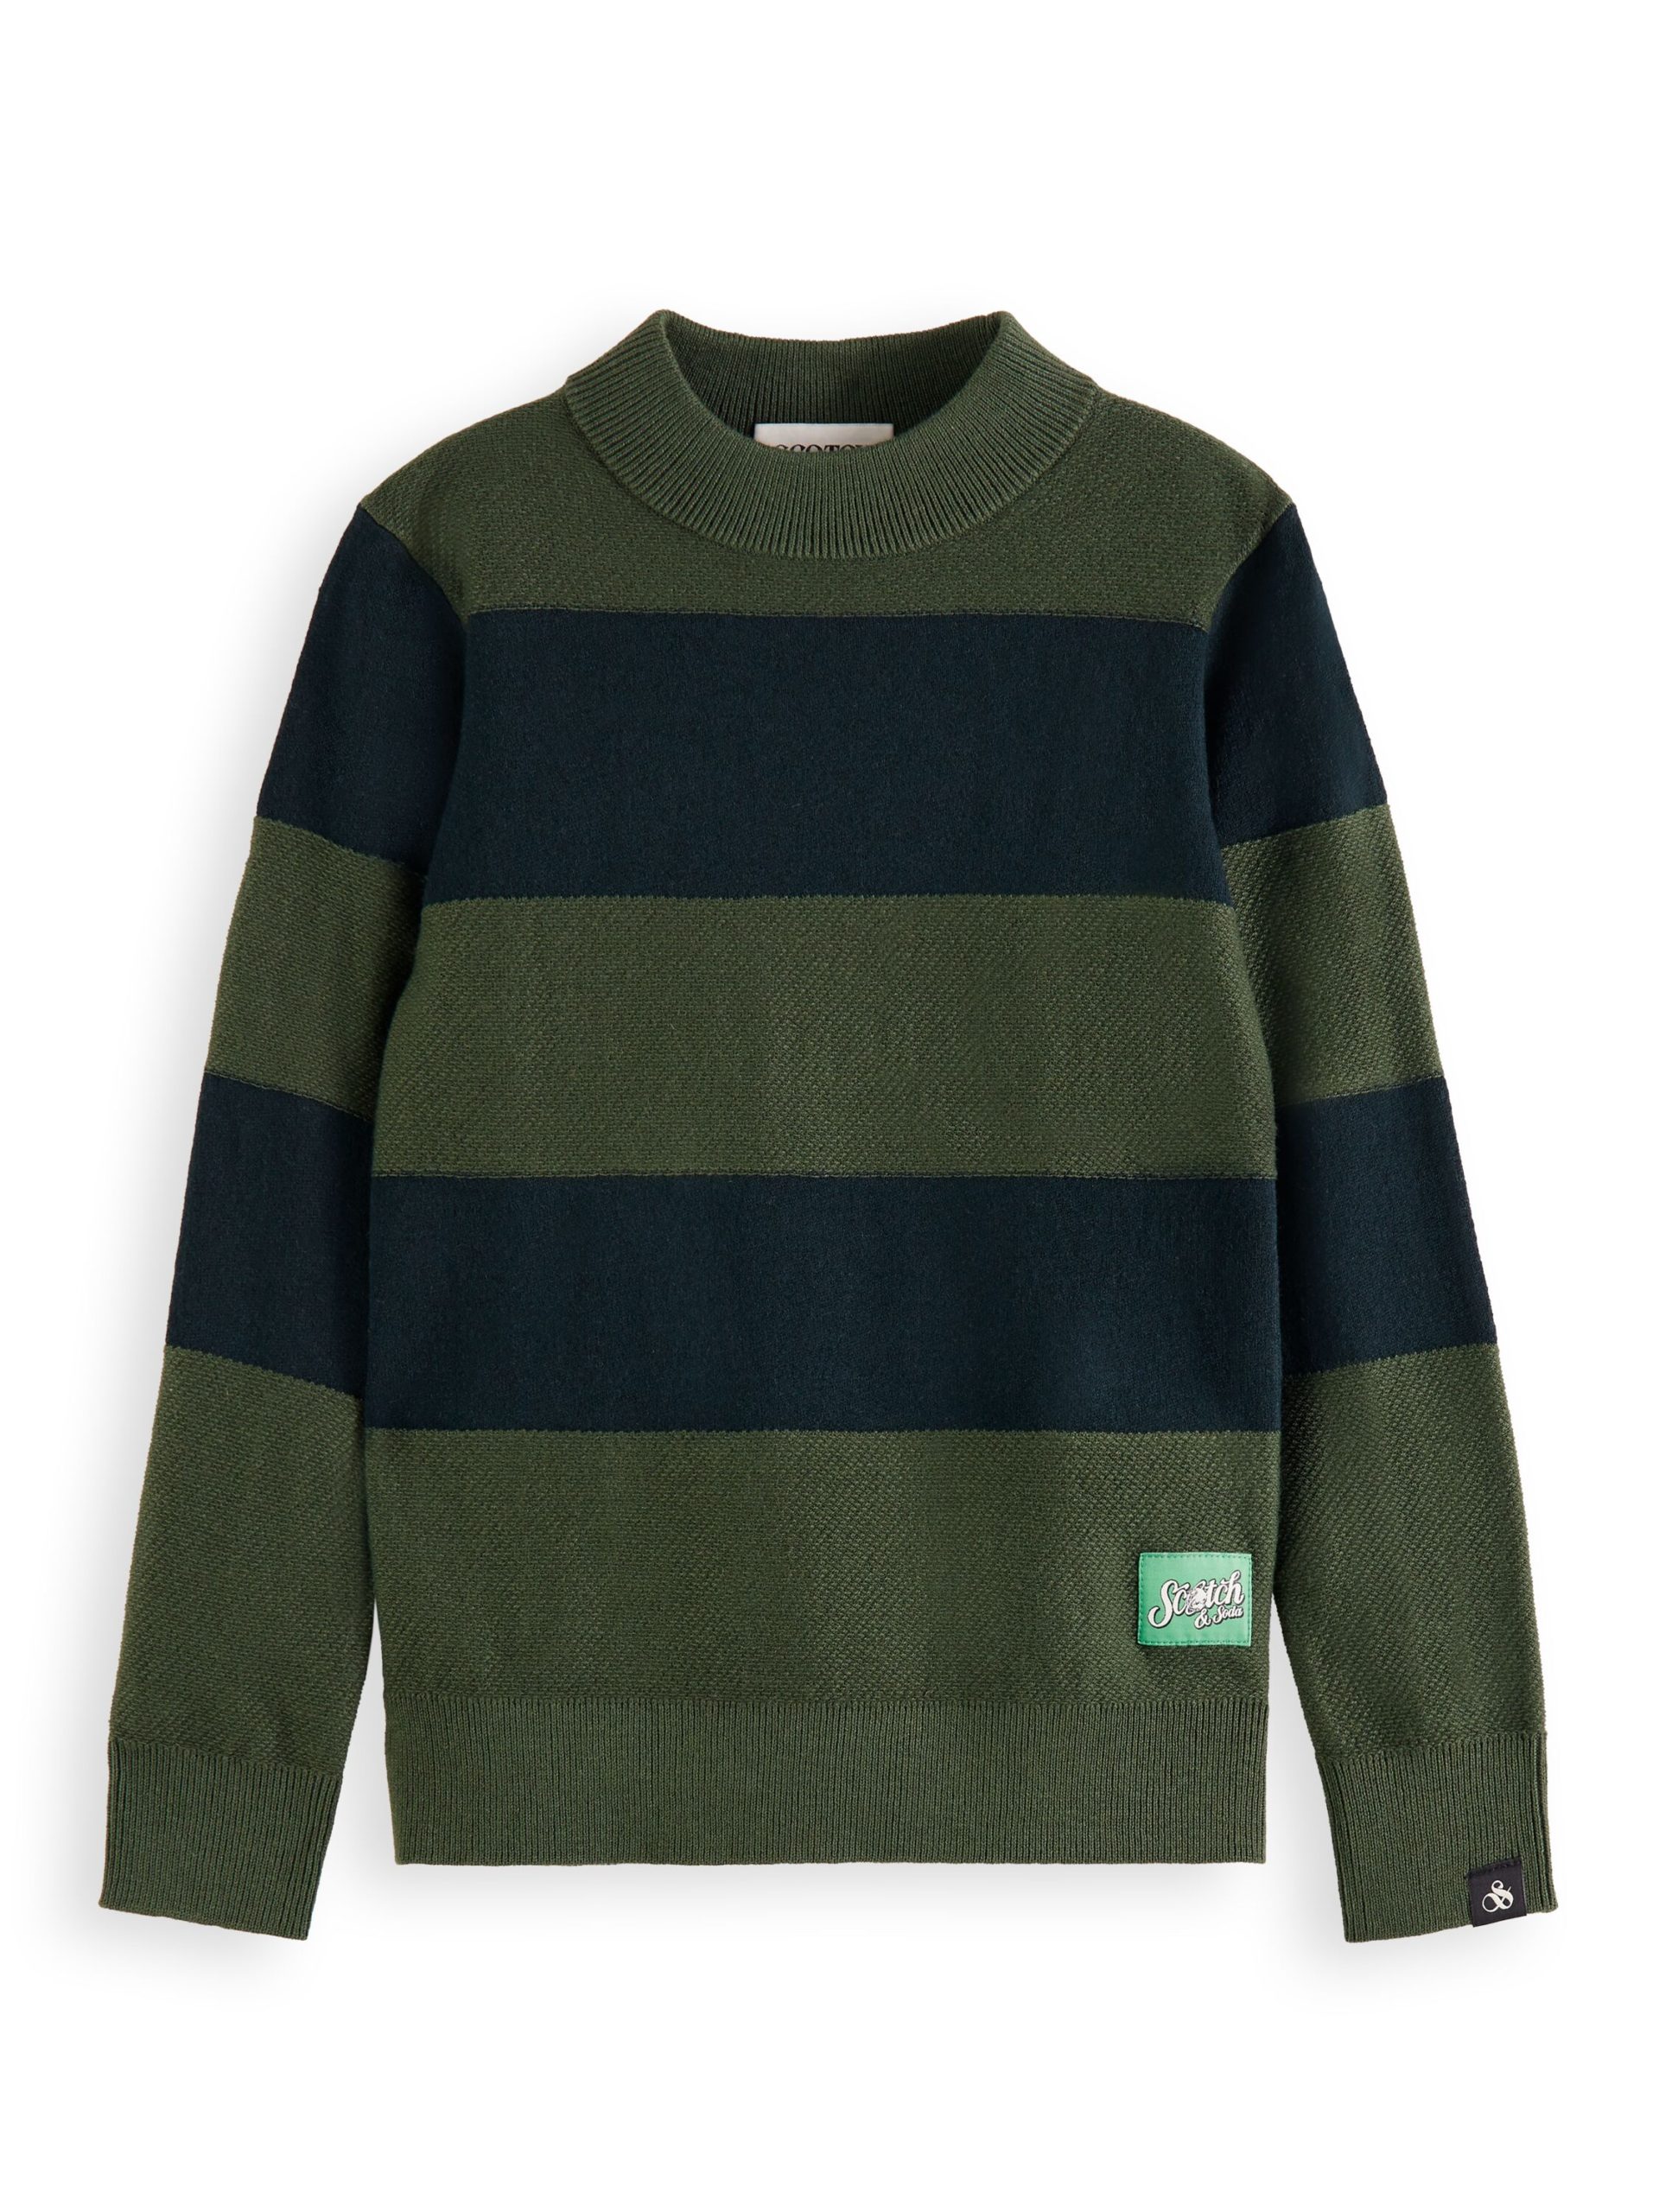 Scotch Shrunk Structured Pullover Sweater - BREEZYKIDZ